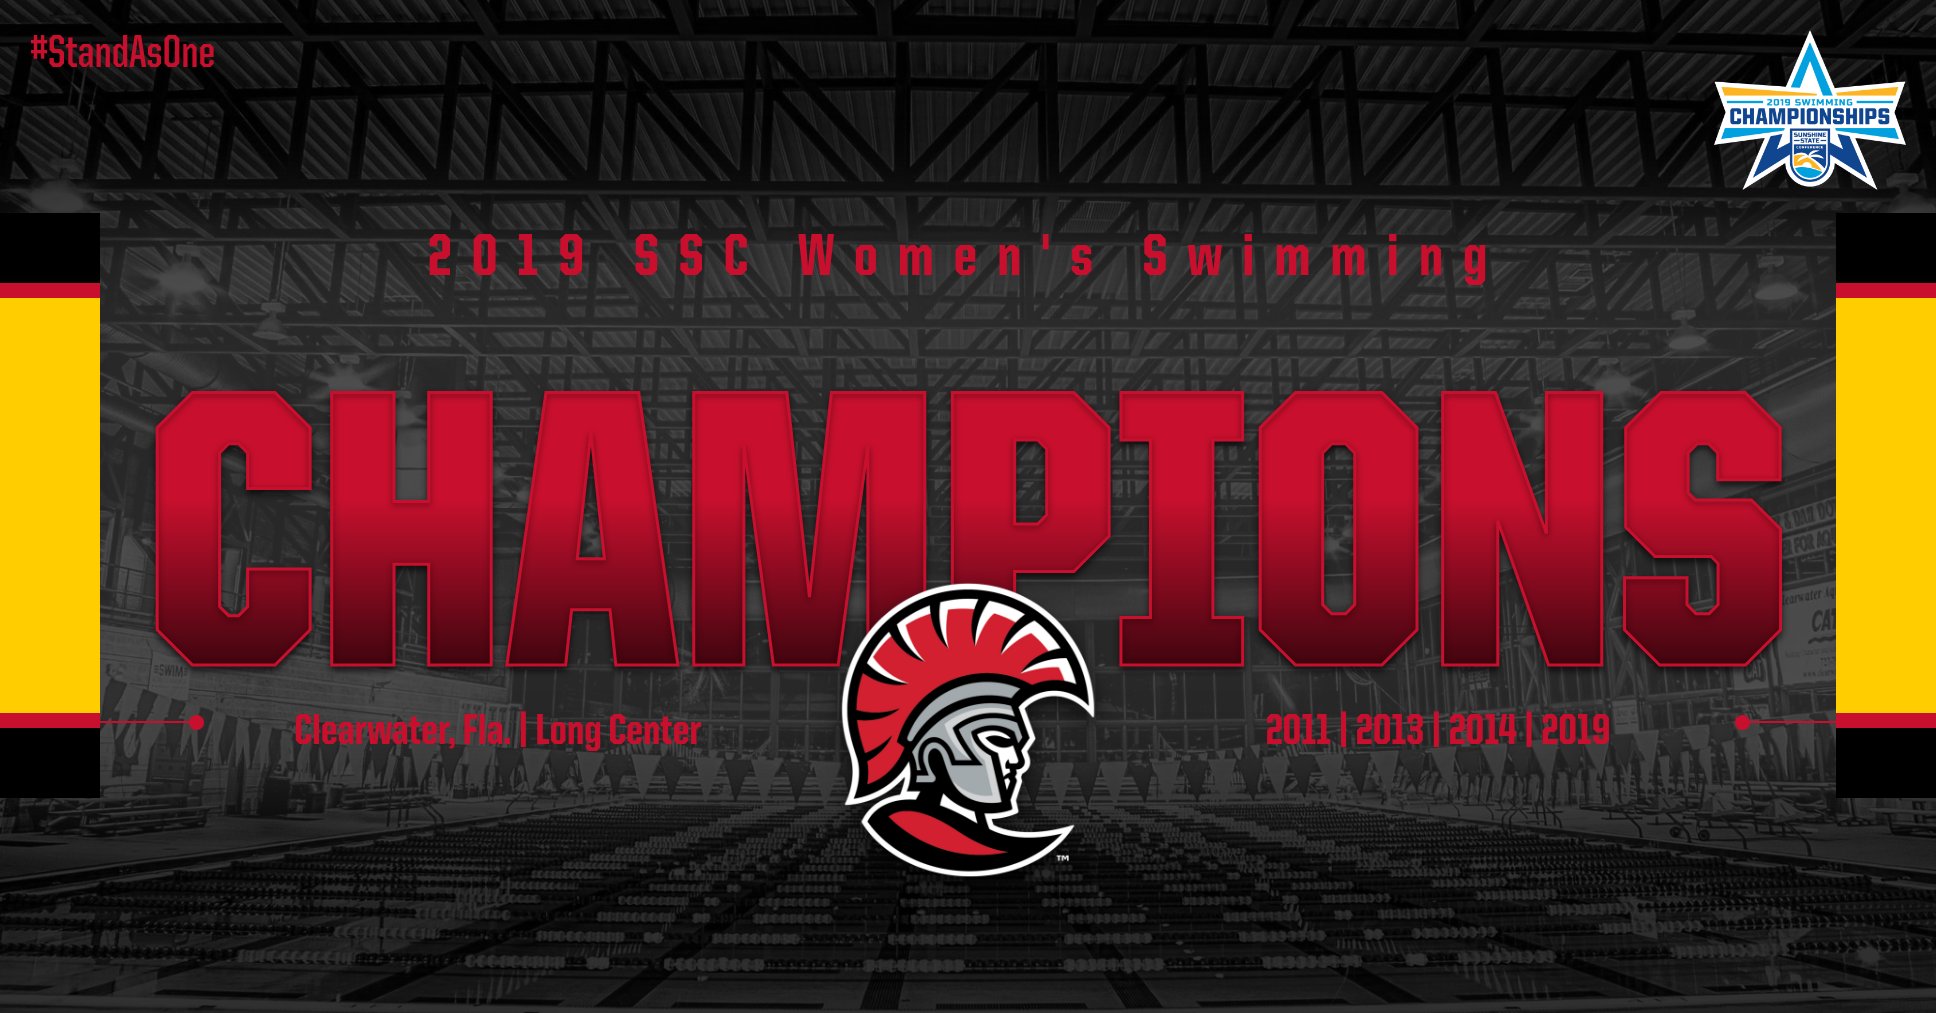 Tampa Women's Swimming Wins 2019 SSC Championship